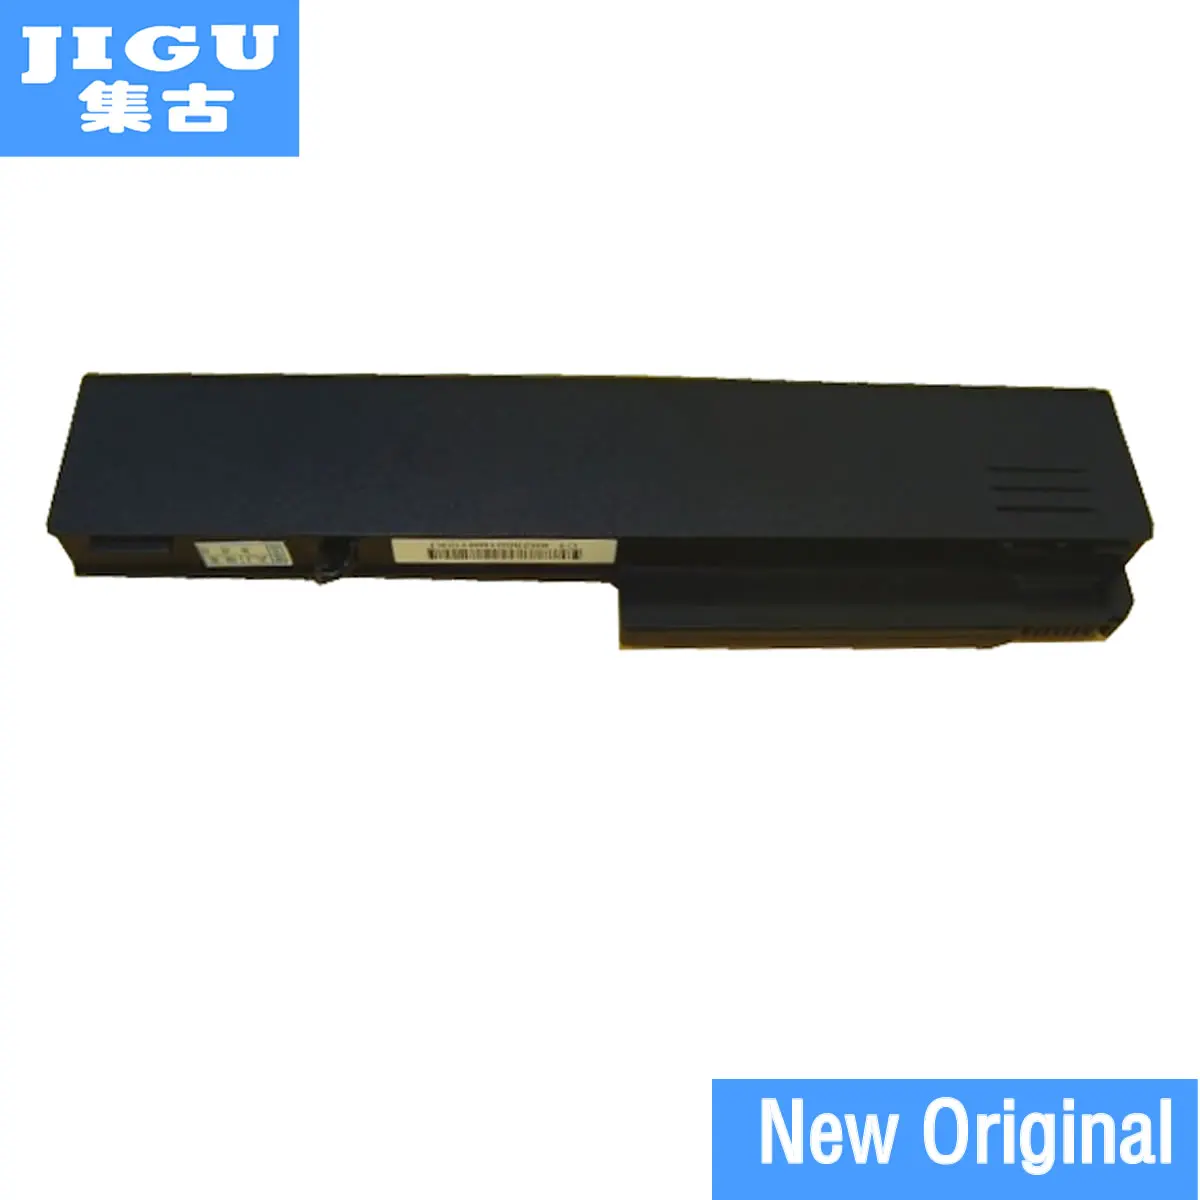 

JIGU Original laptop Battery For Hp for Business Notebook 6710b 6710s 6715b 6715s NC6105 NC6110 NC6115 NC6120 nc6140